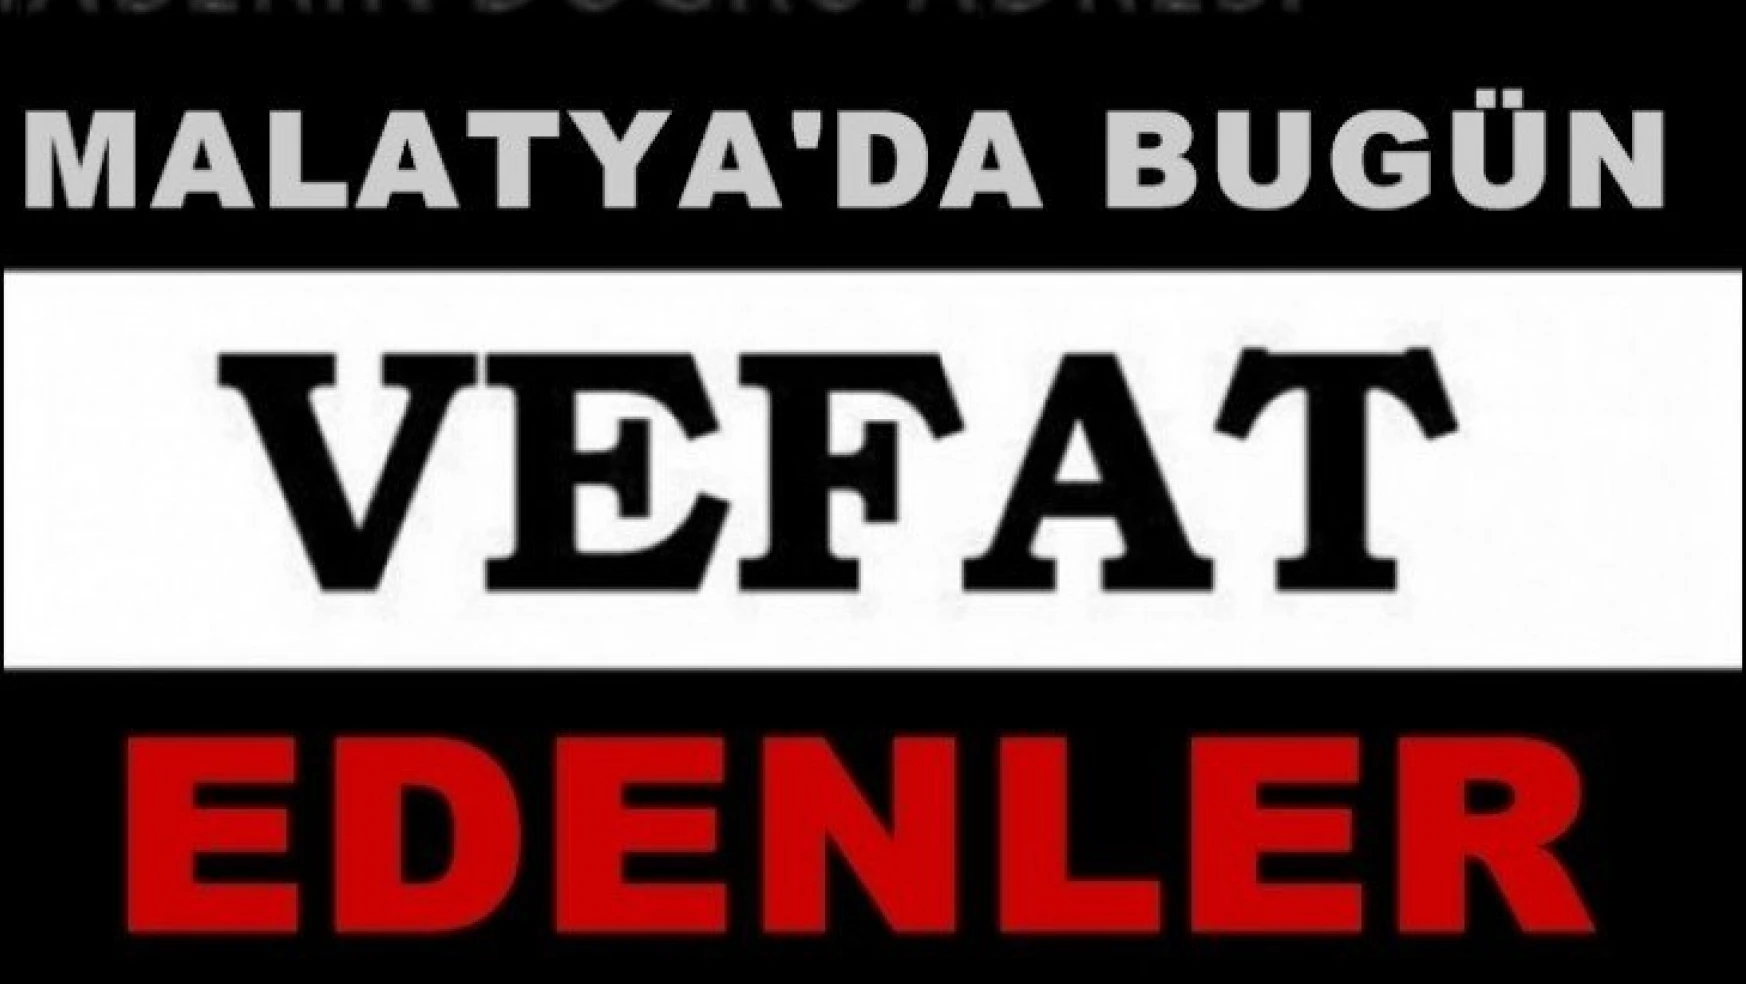 Malatya'da Bugün 13 Kişi Hayatını Kaybetti